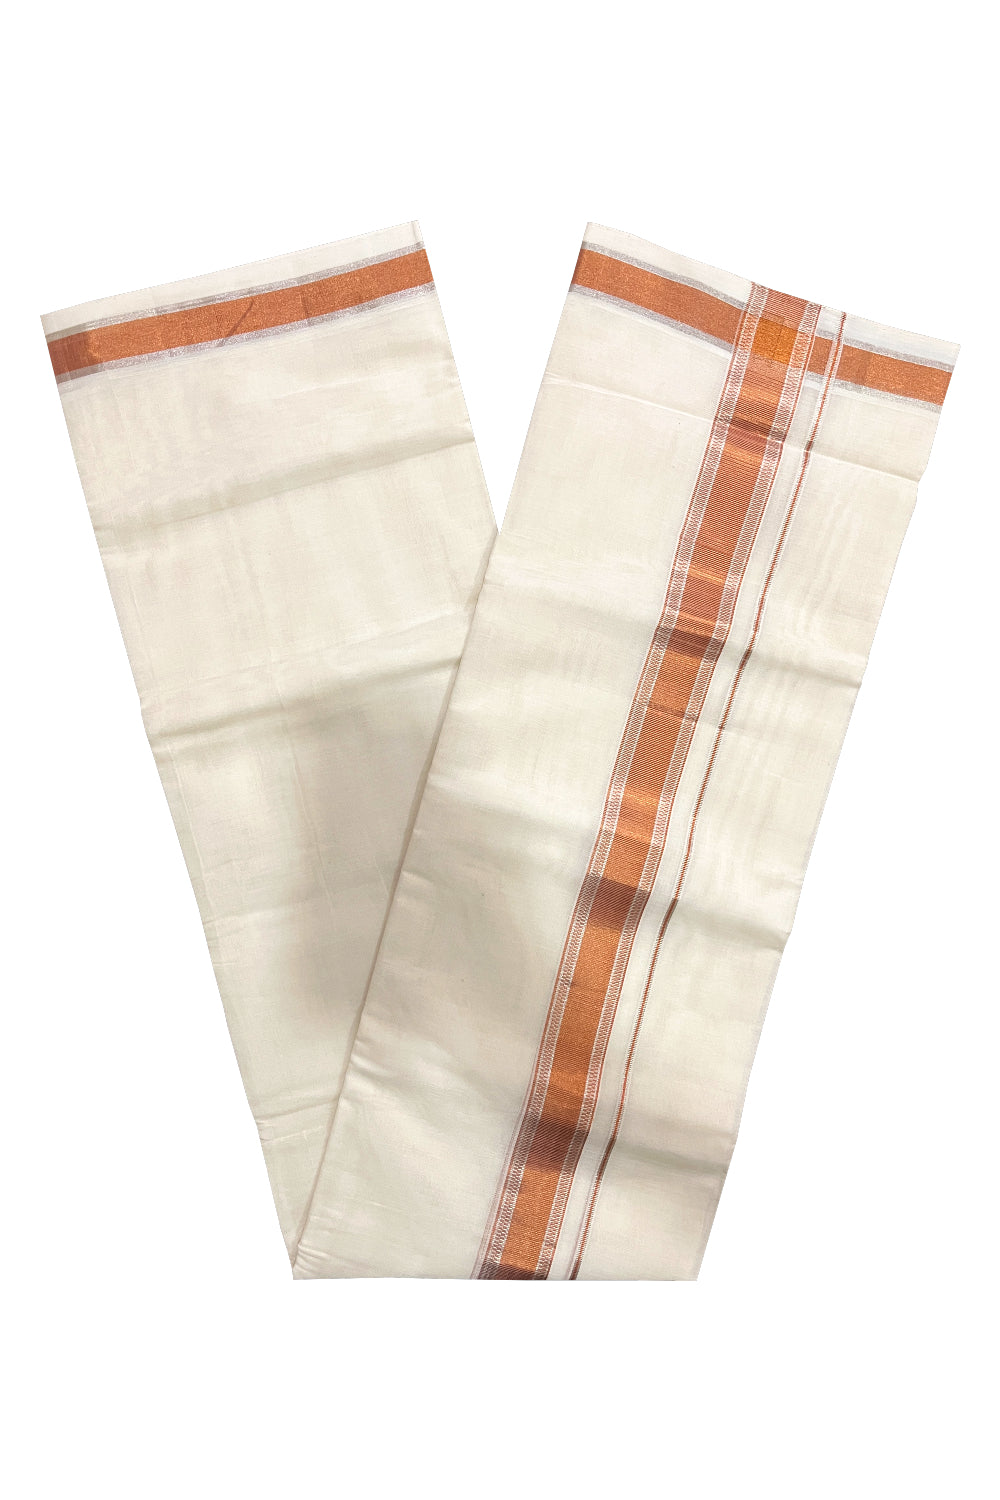 Southloom Premium Handloom Cotton Double Mundu with Silver and Copper Kasavu Design Border (South Indian Kerala Dhoti)